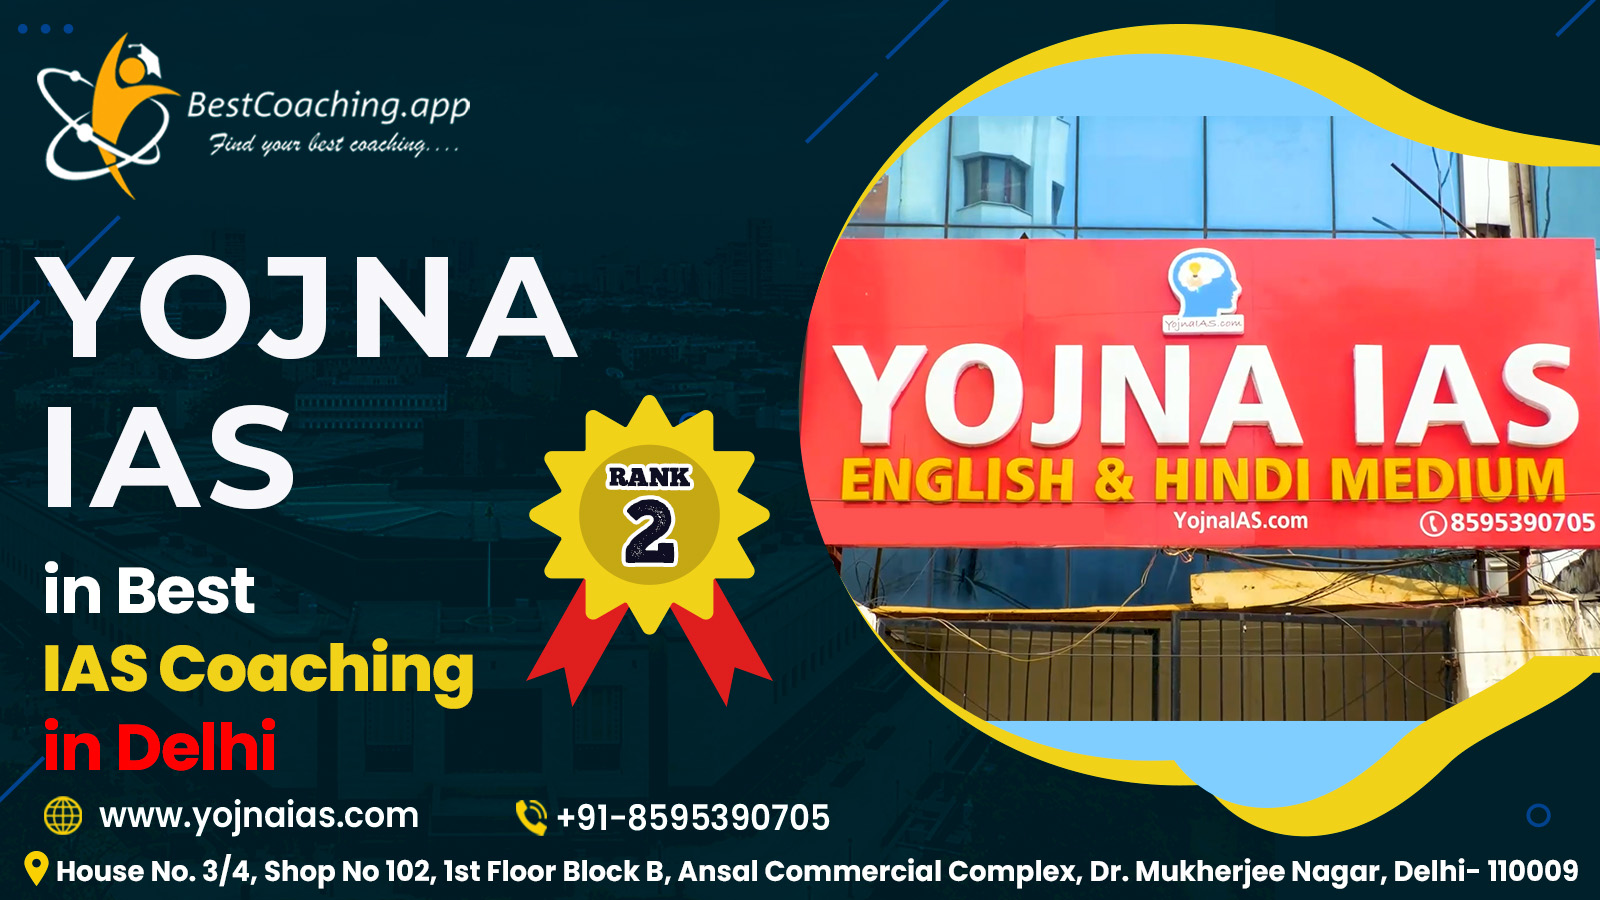 Yojna IAS Rank 2 in Best IAS Coaching in Delhi